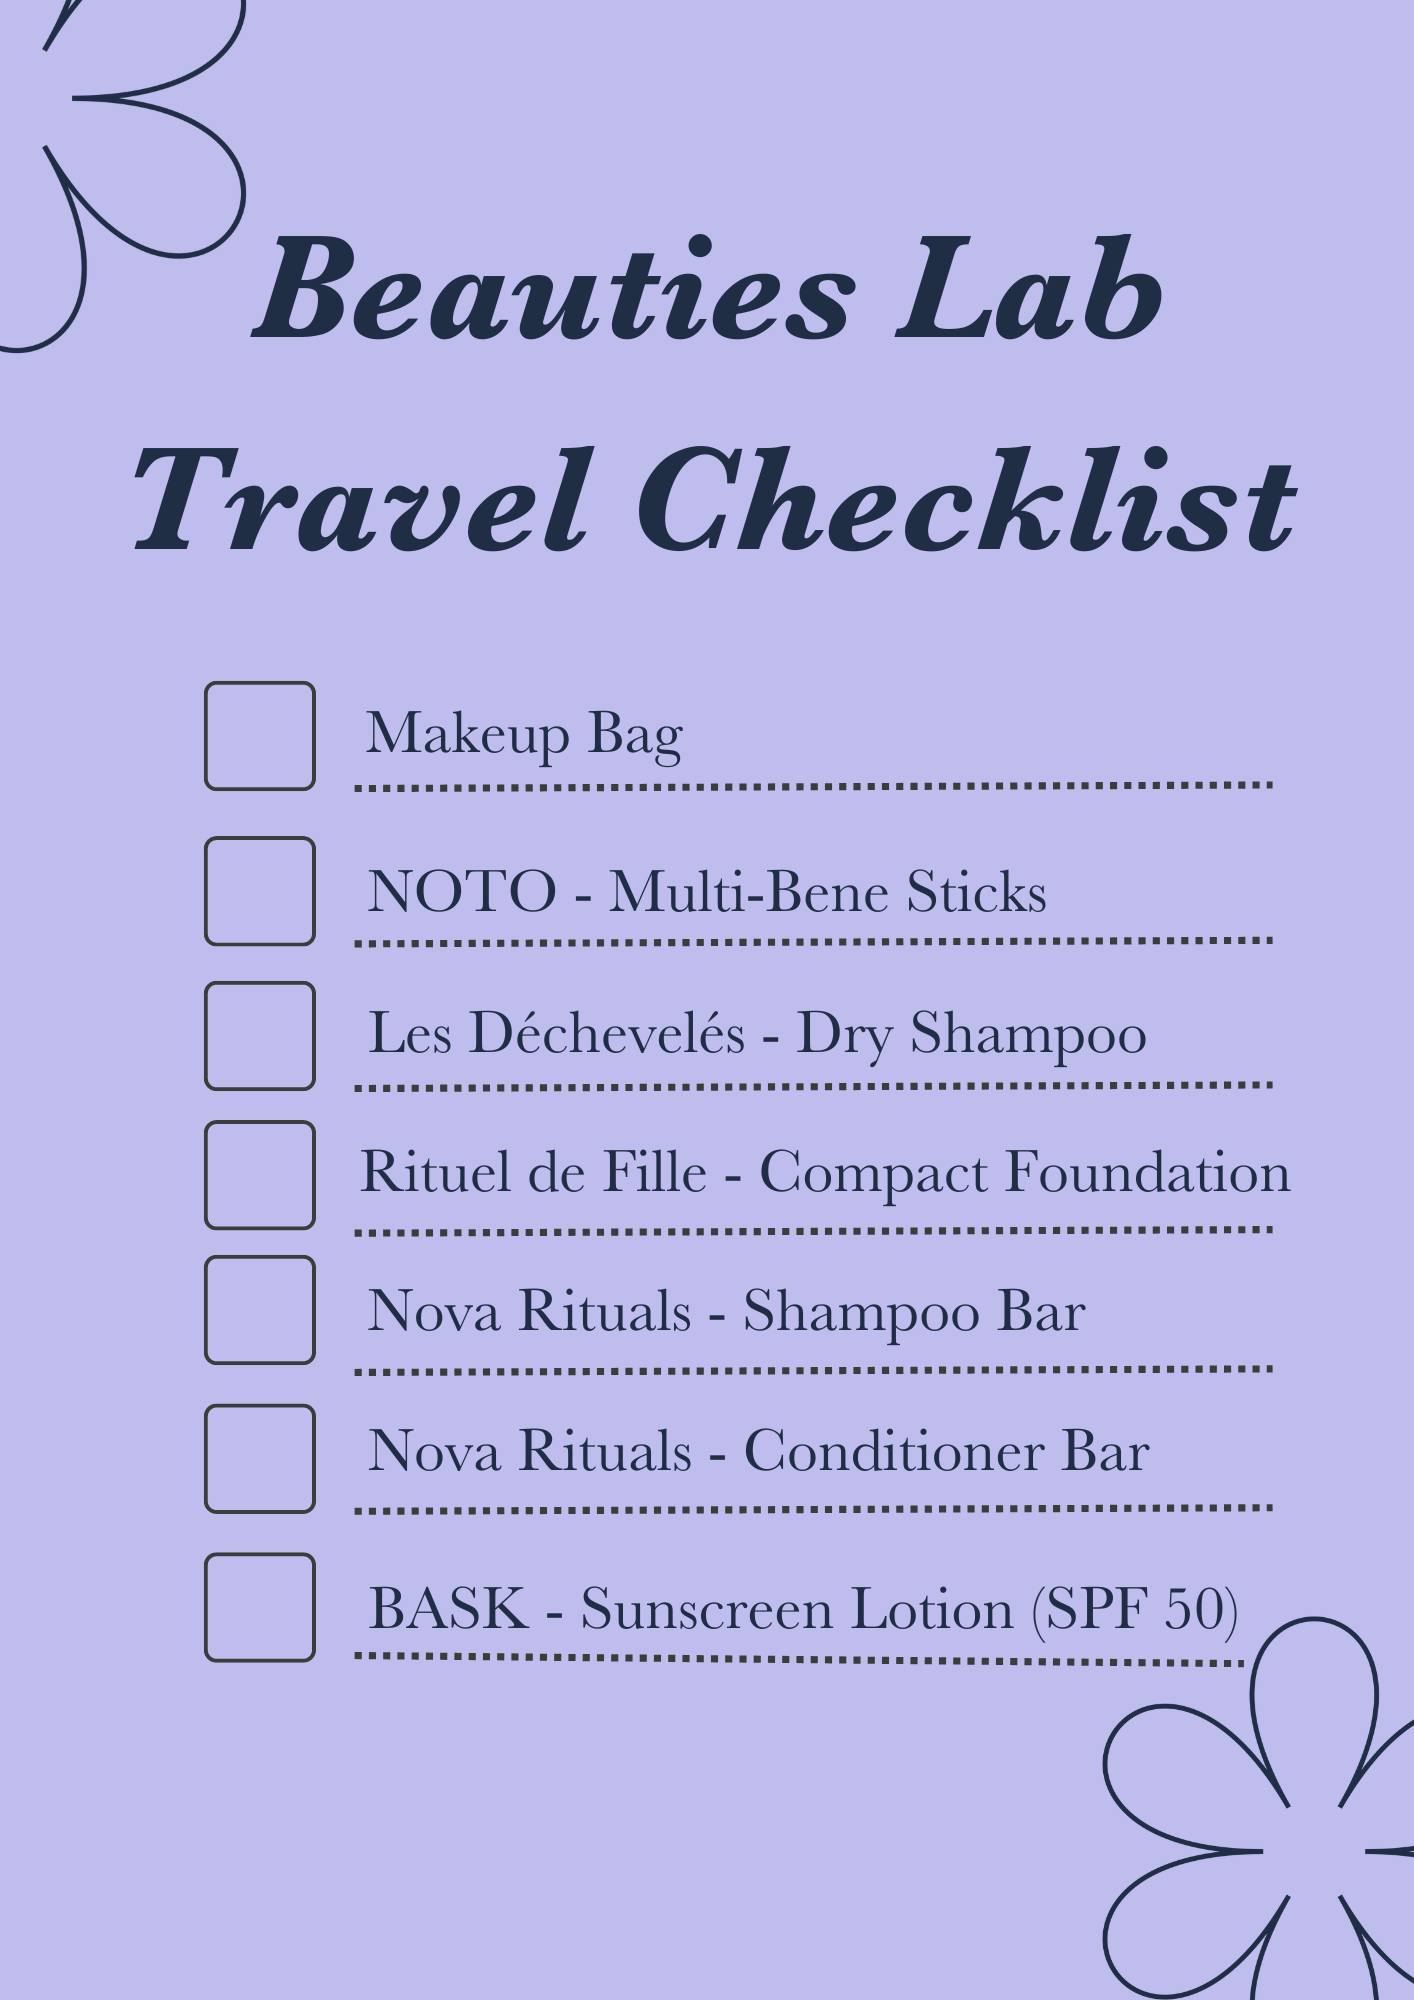 Beauties Lab Travel Checklist